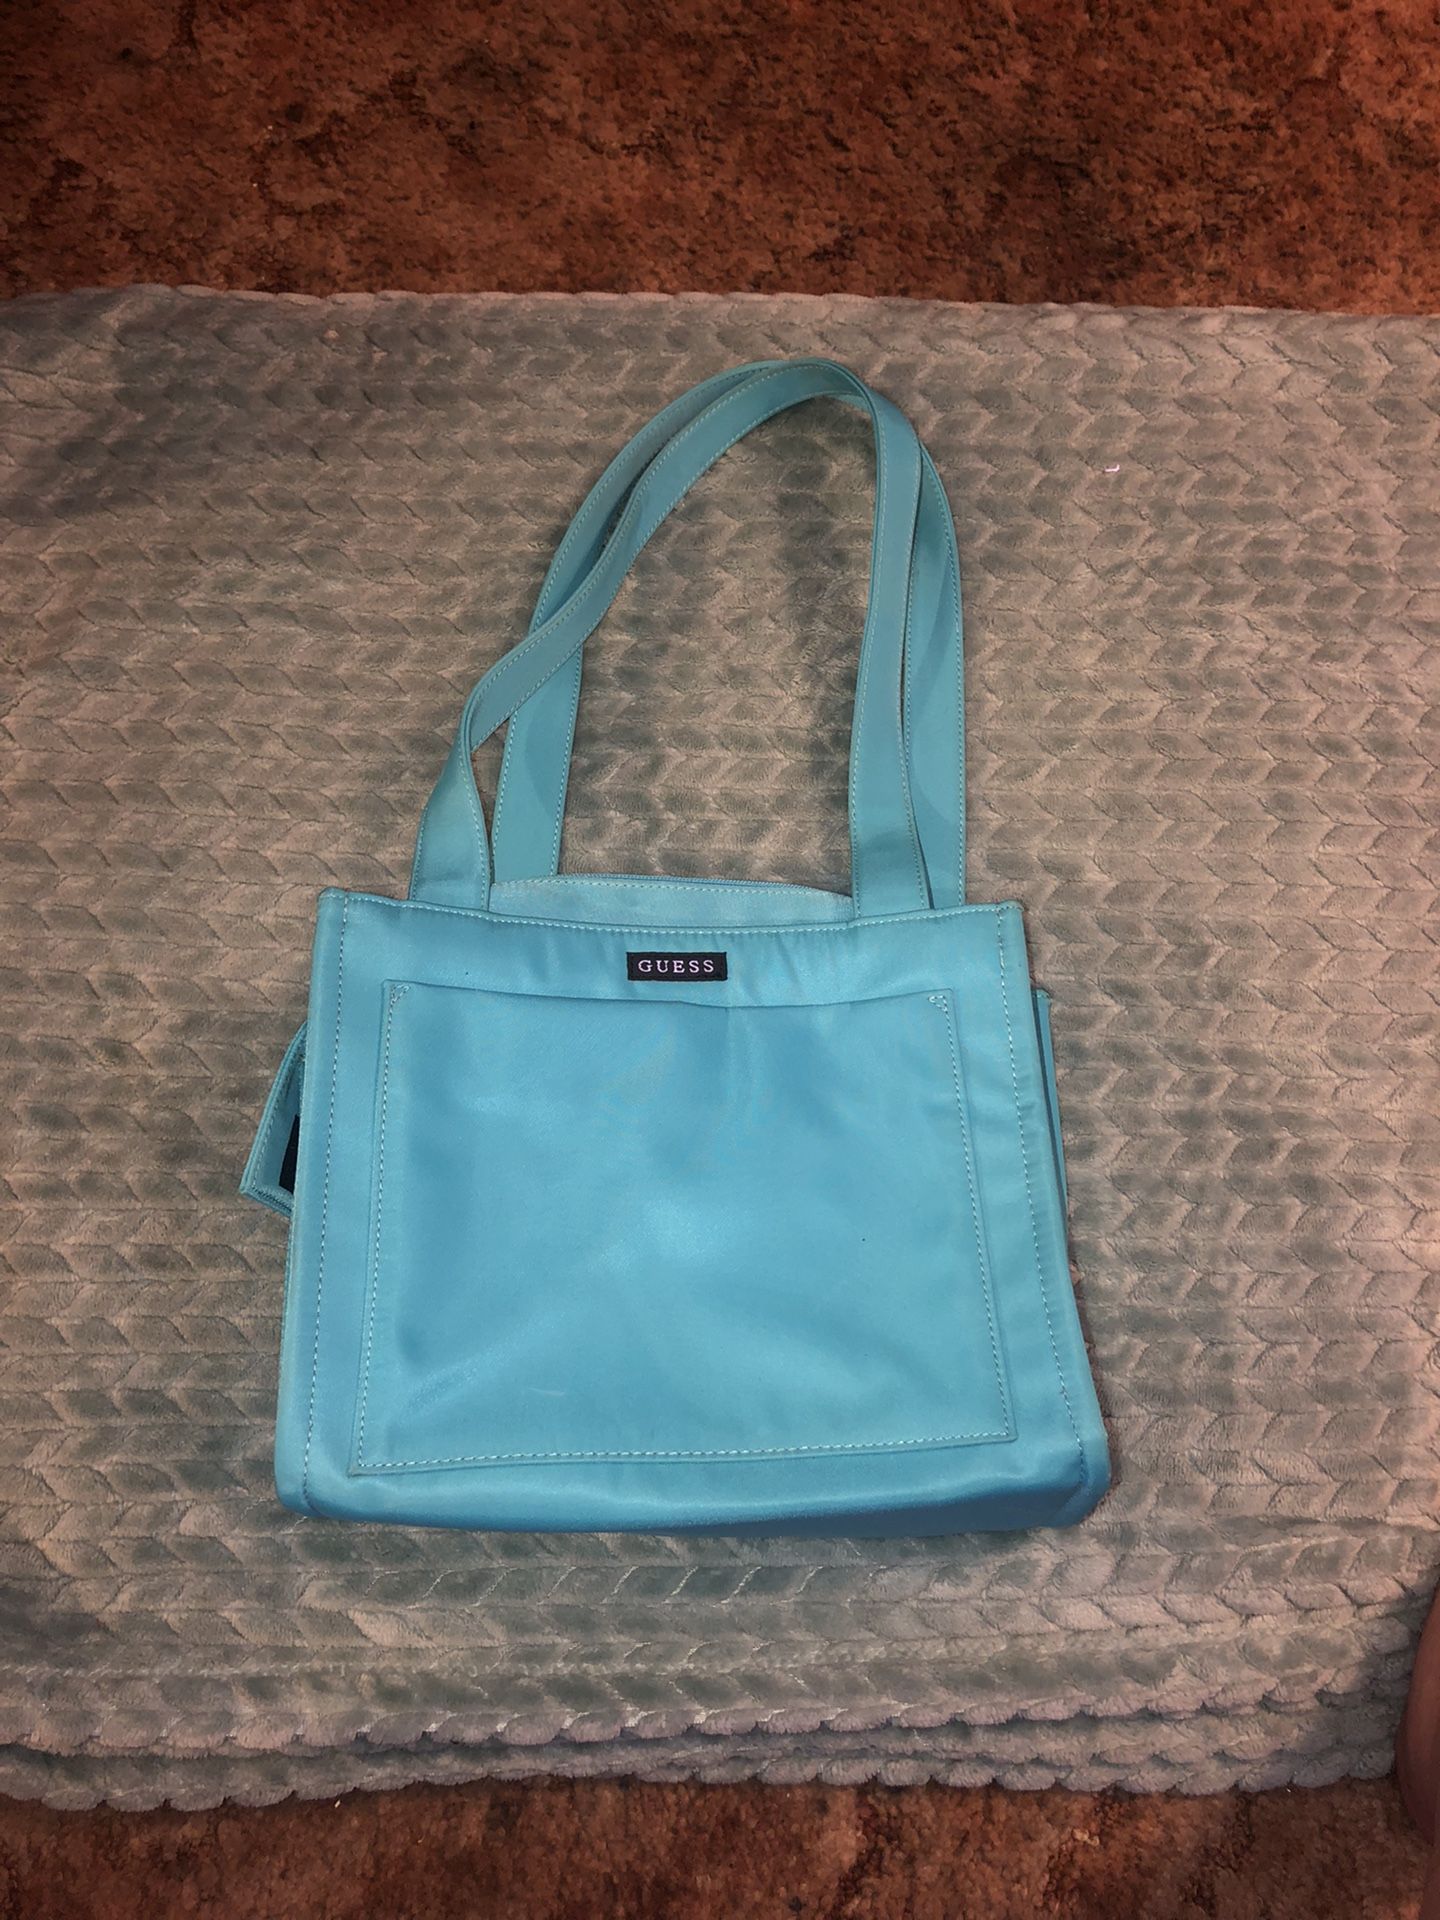 Guess Turquoise Handbag